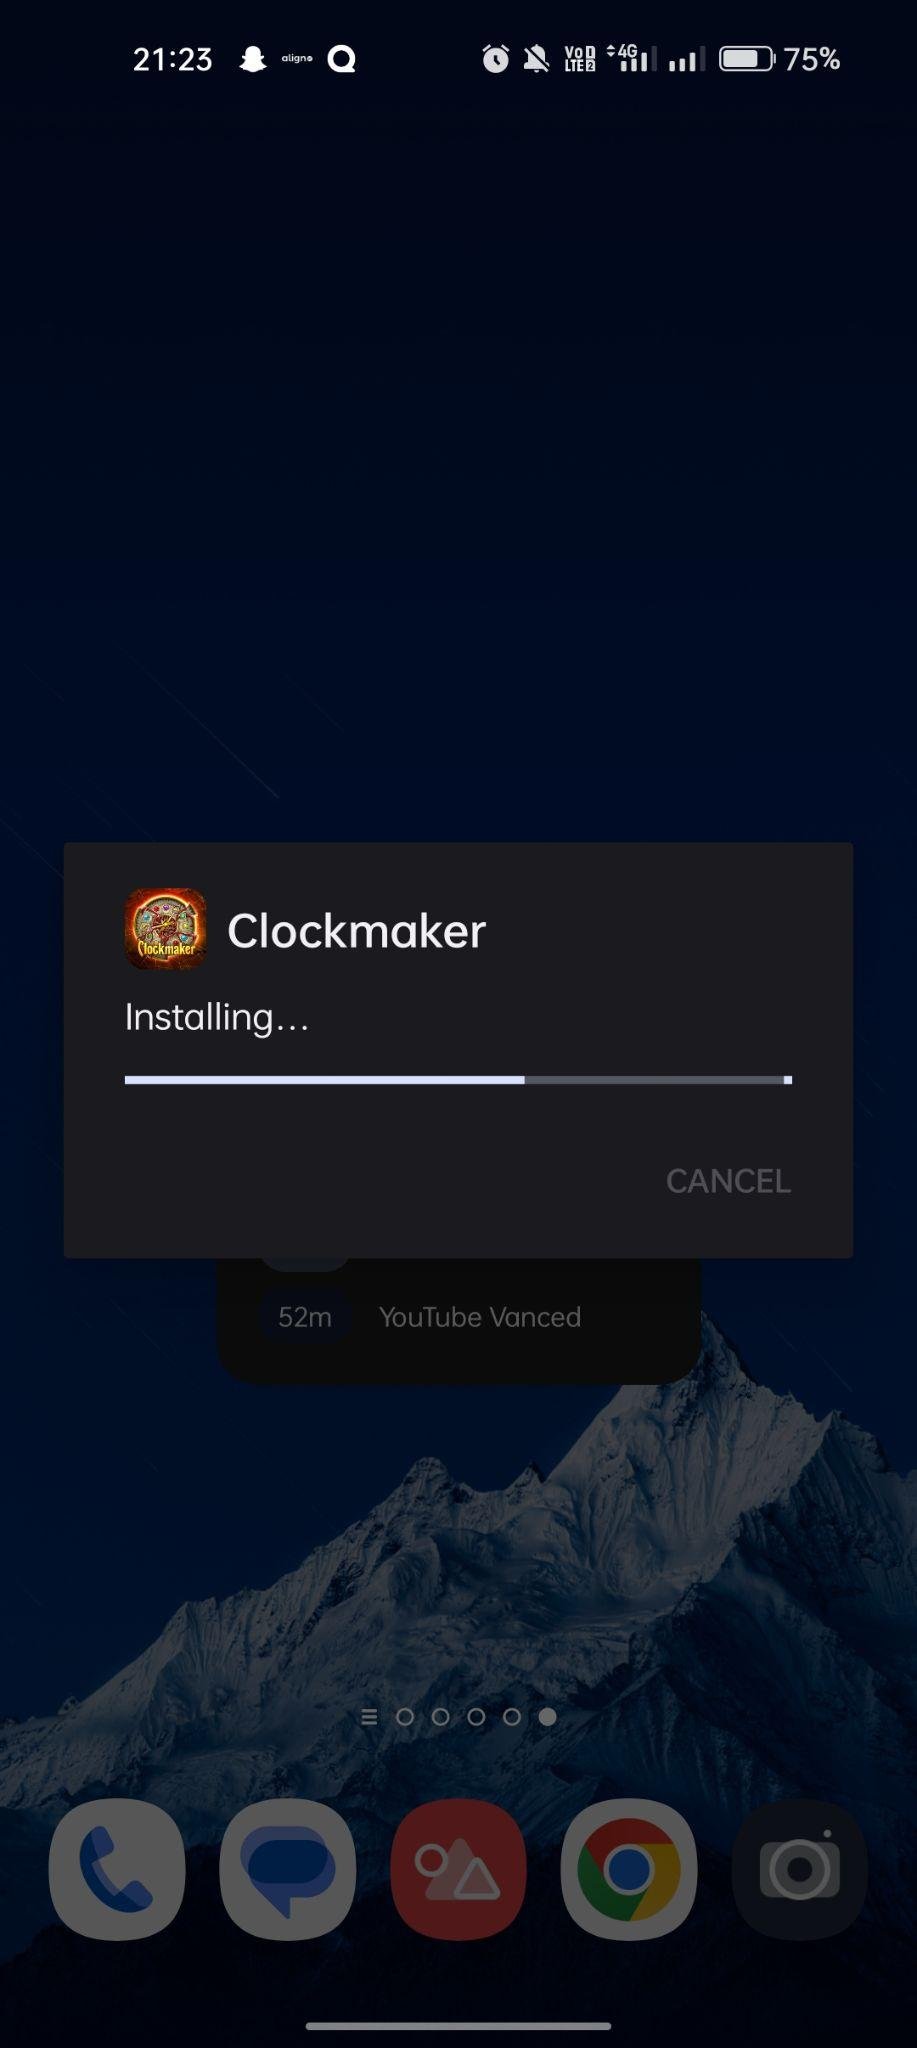 Clockmaker apk installing